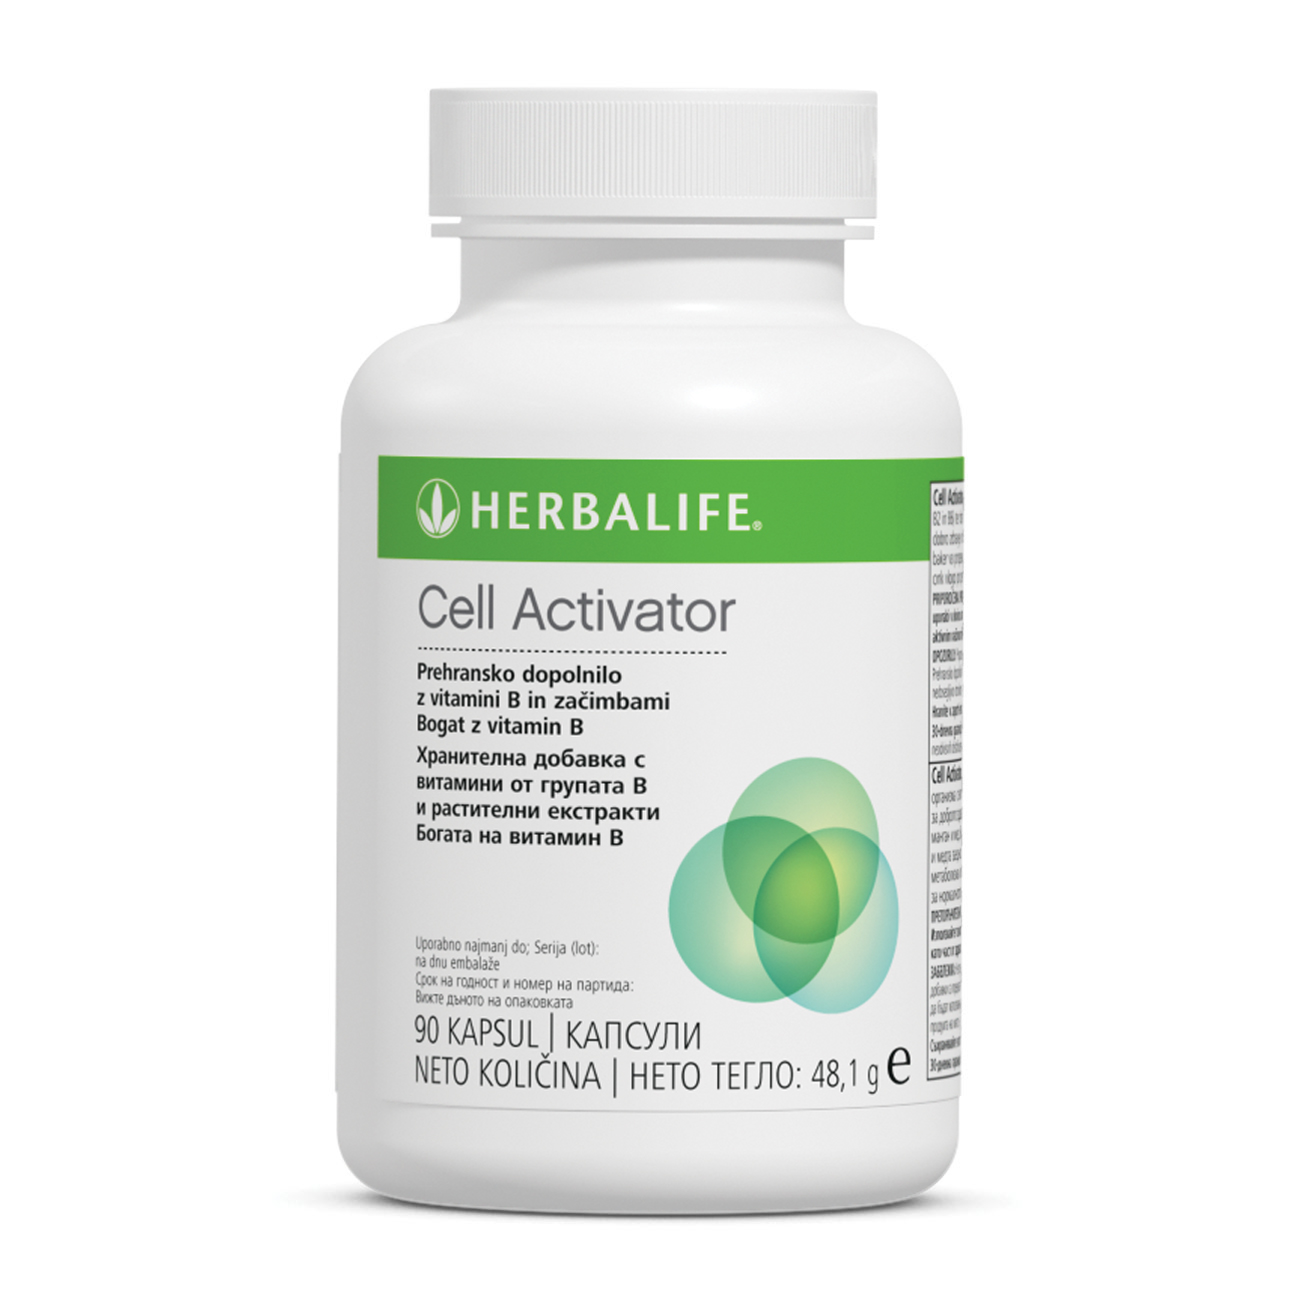 Cell Activator хранителна добавка  